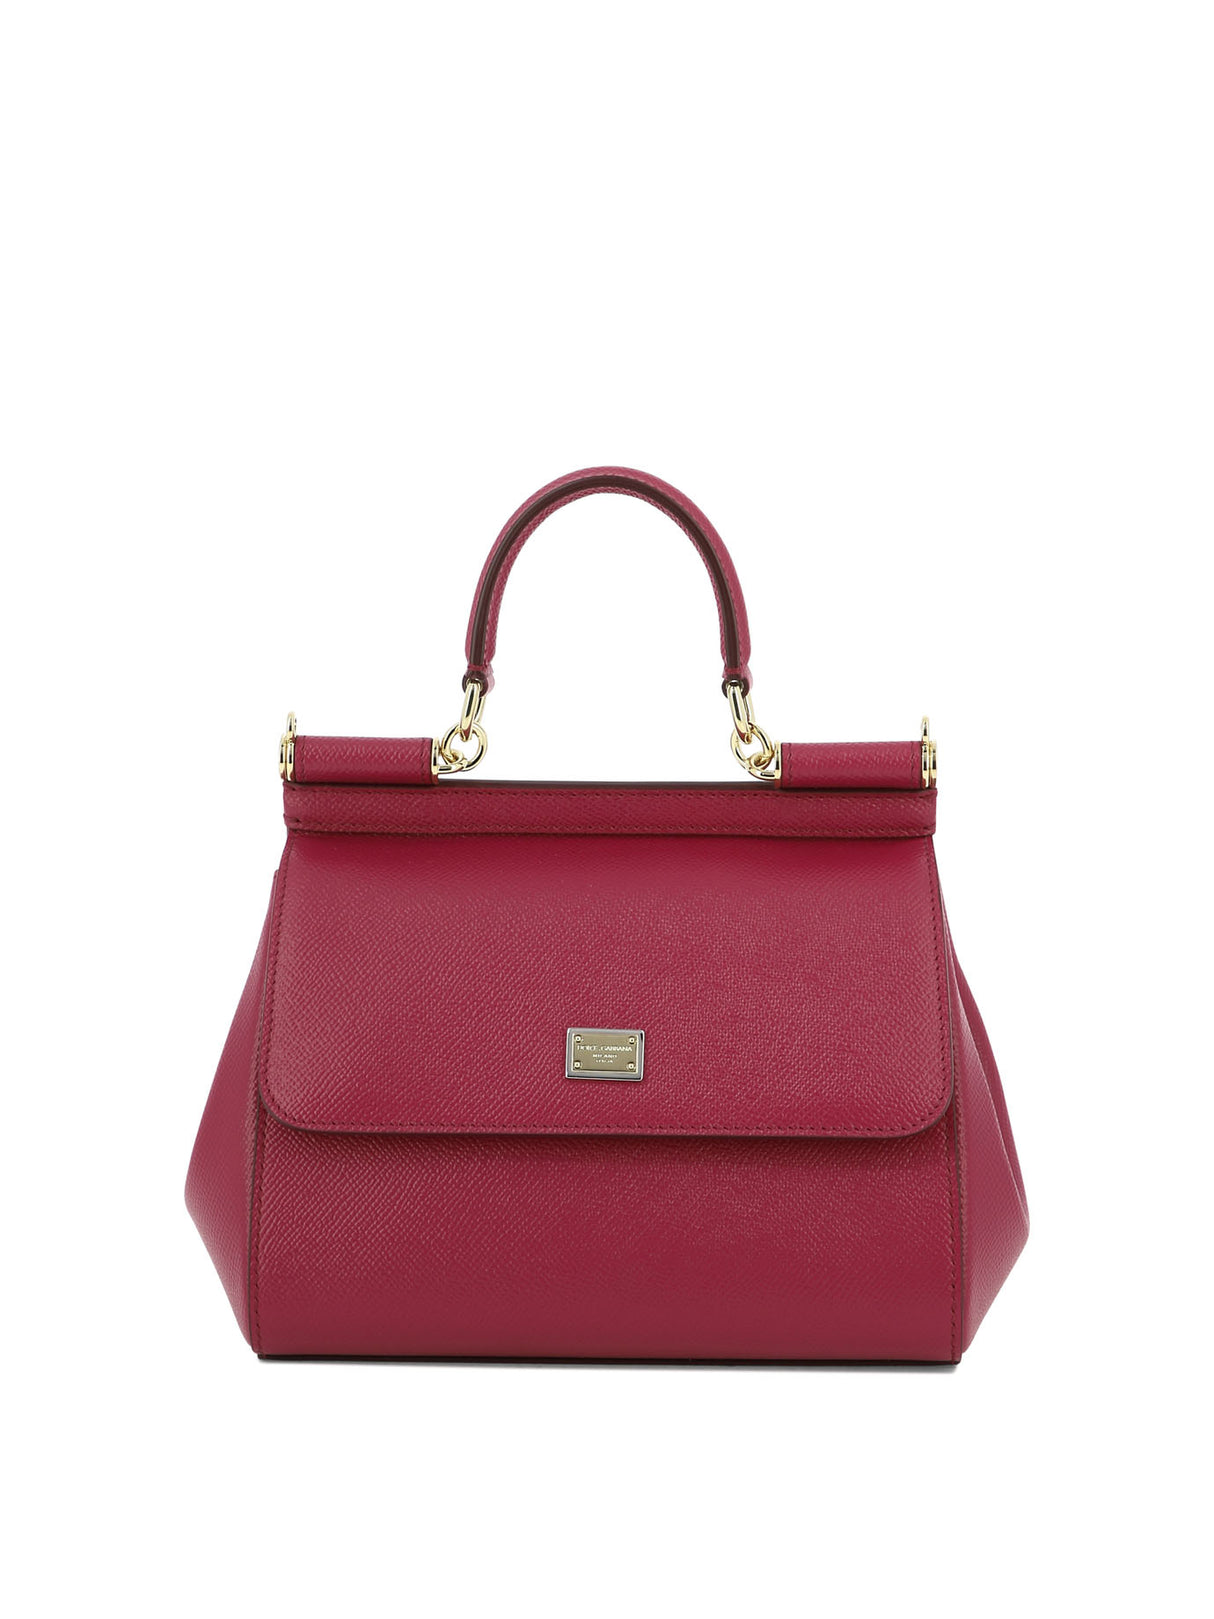 DOLCE & GABBANA "Small Sicily" Fuchsia Pink Leather Top-Handle Handbag for Women